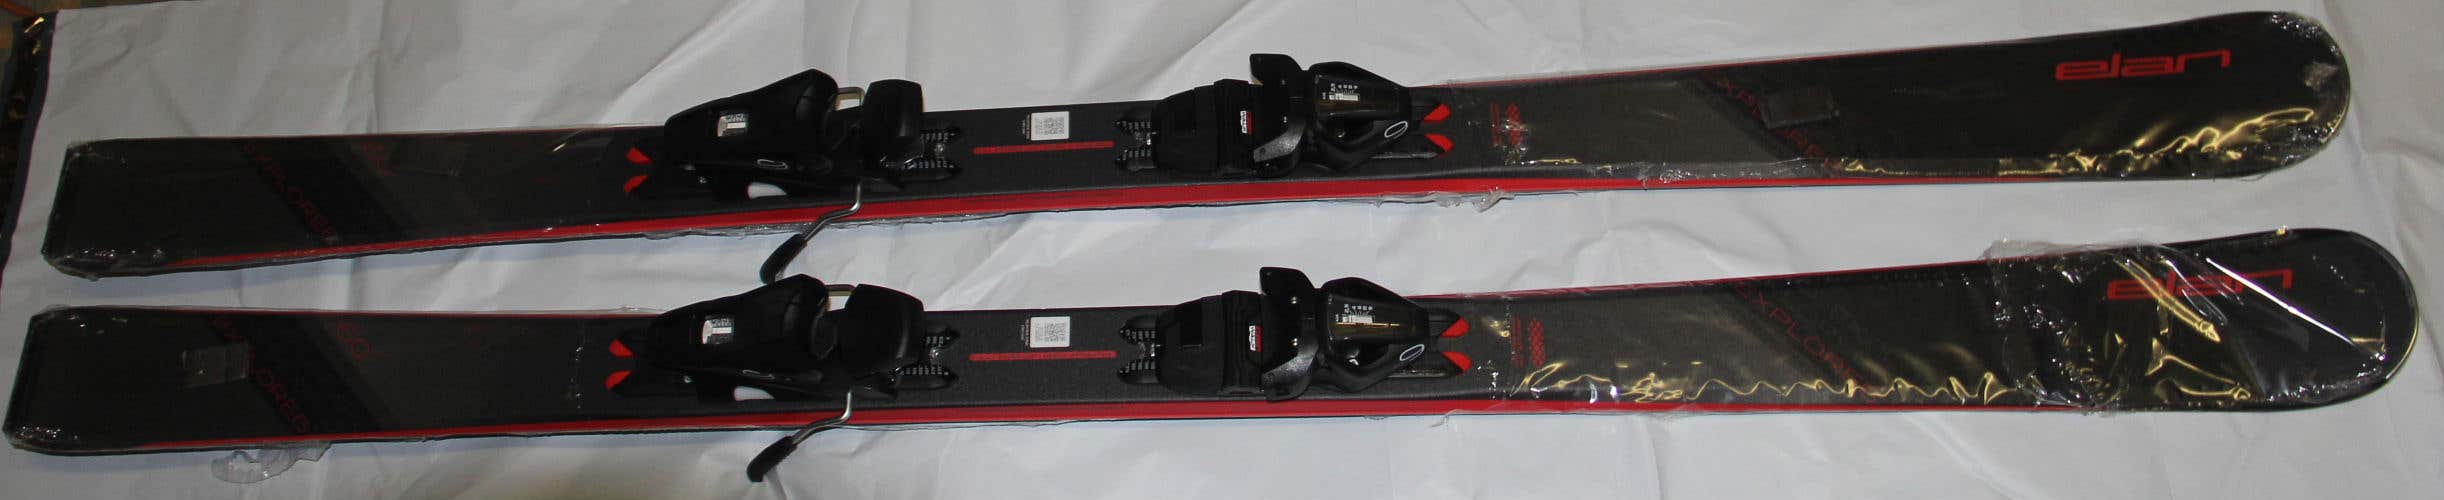 NEW Elan Explore 6 red 160cm skis men's with EL 9.0 GW size adjustable bindings